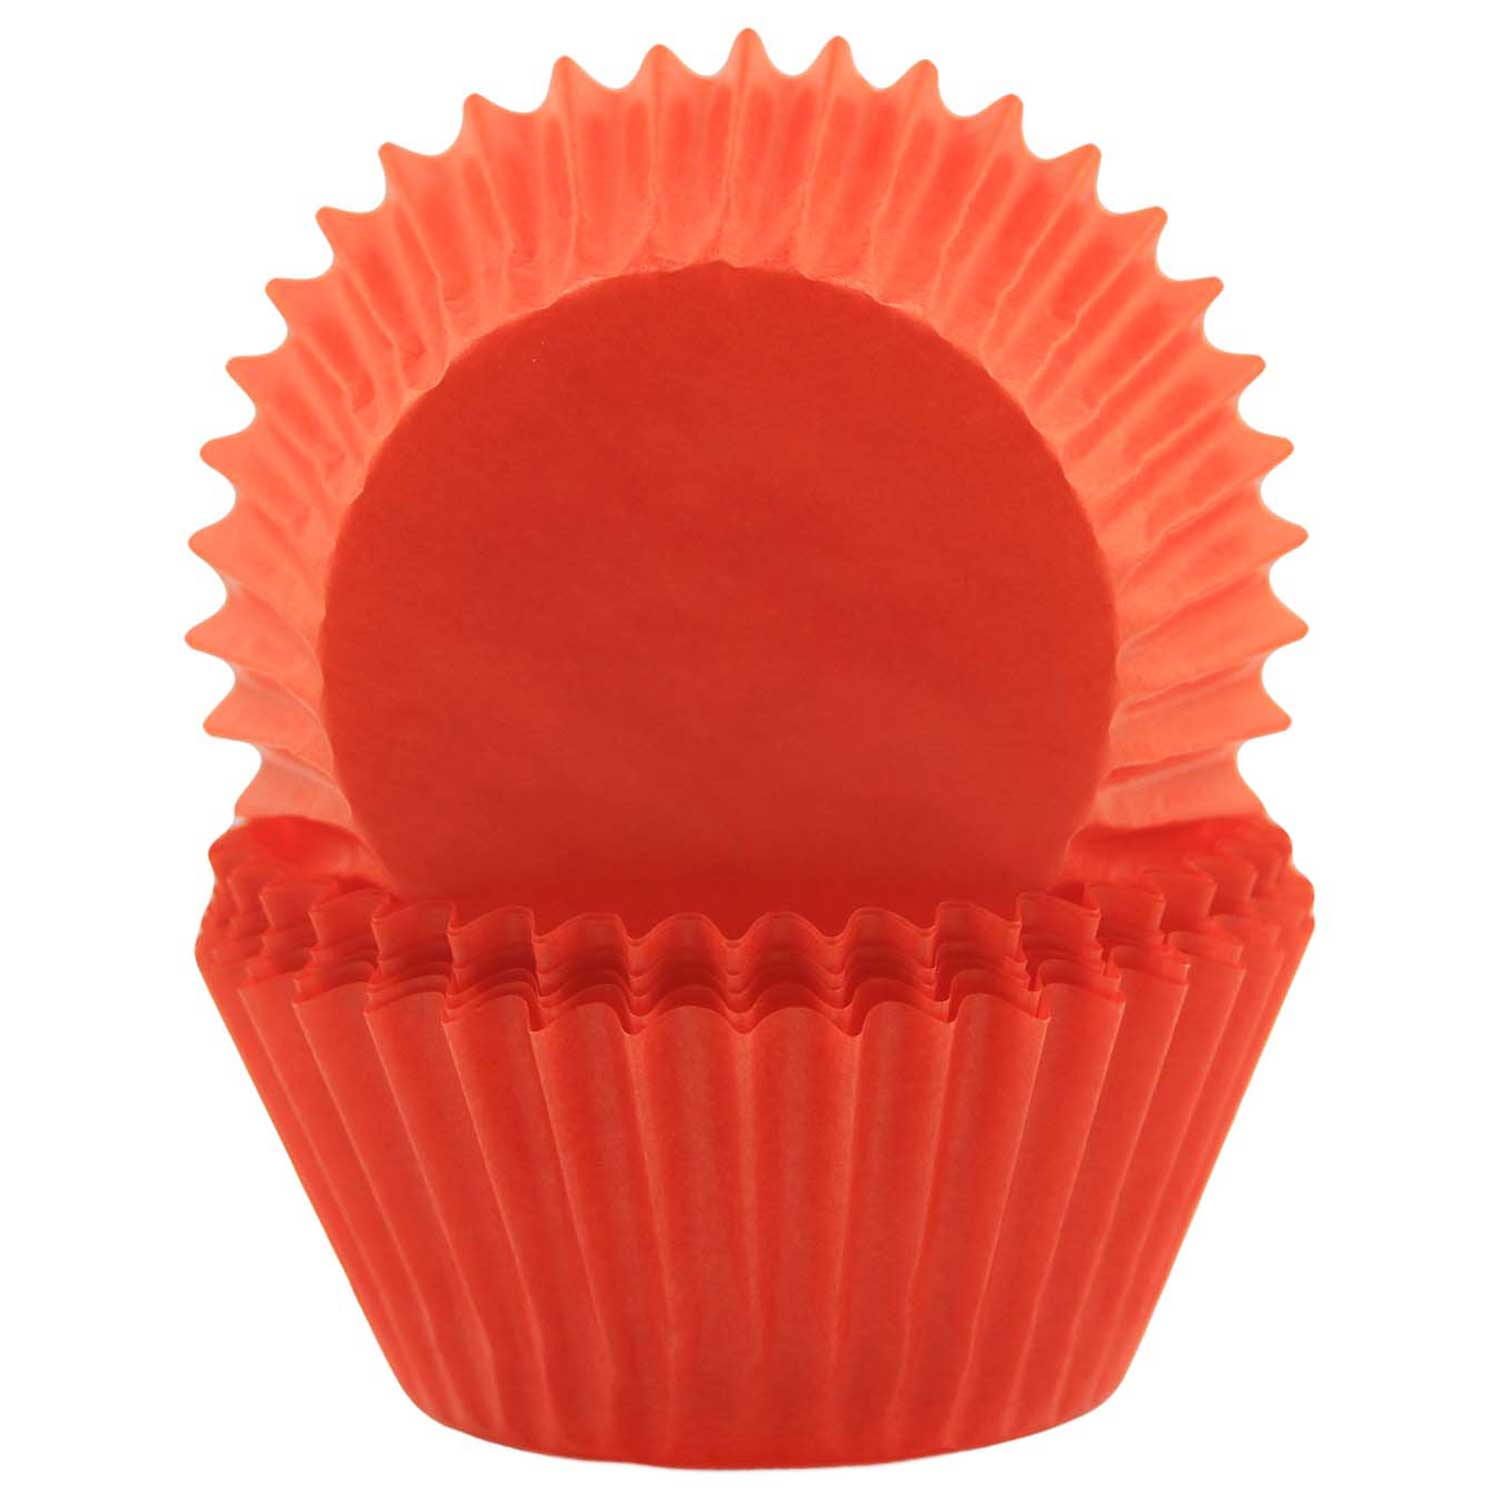 Orange Standard Cupcake Liners